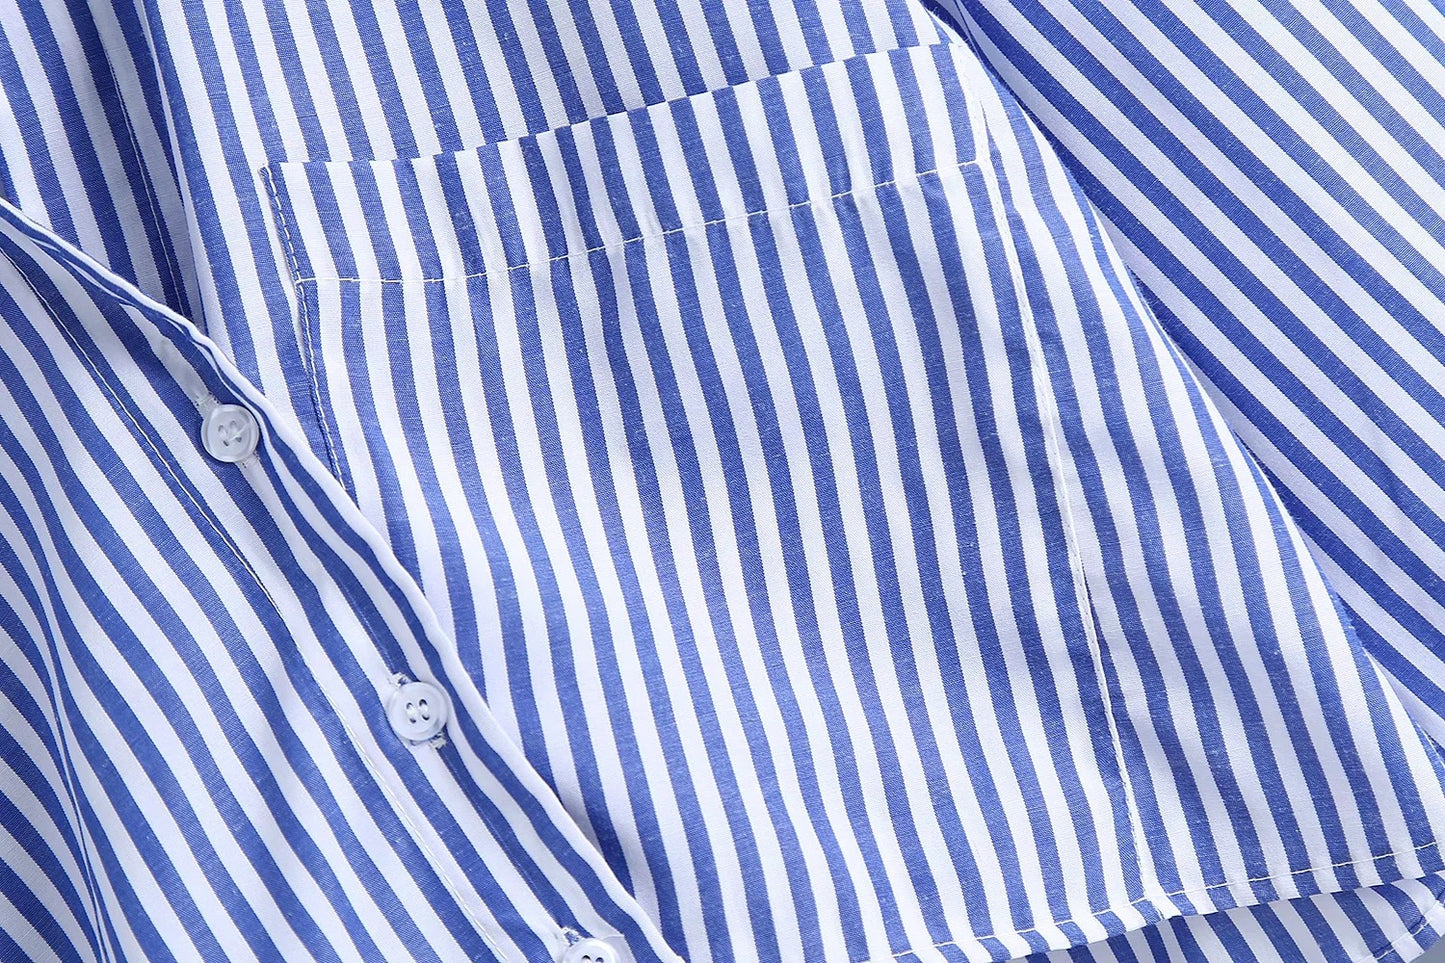 BTS Jimin Inspired Blue Striped Short Long-Sleeved